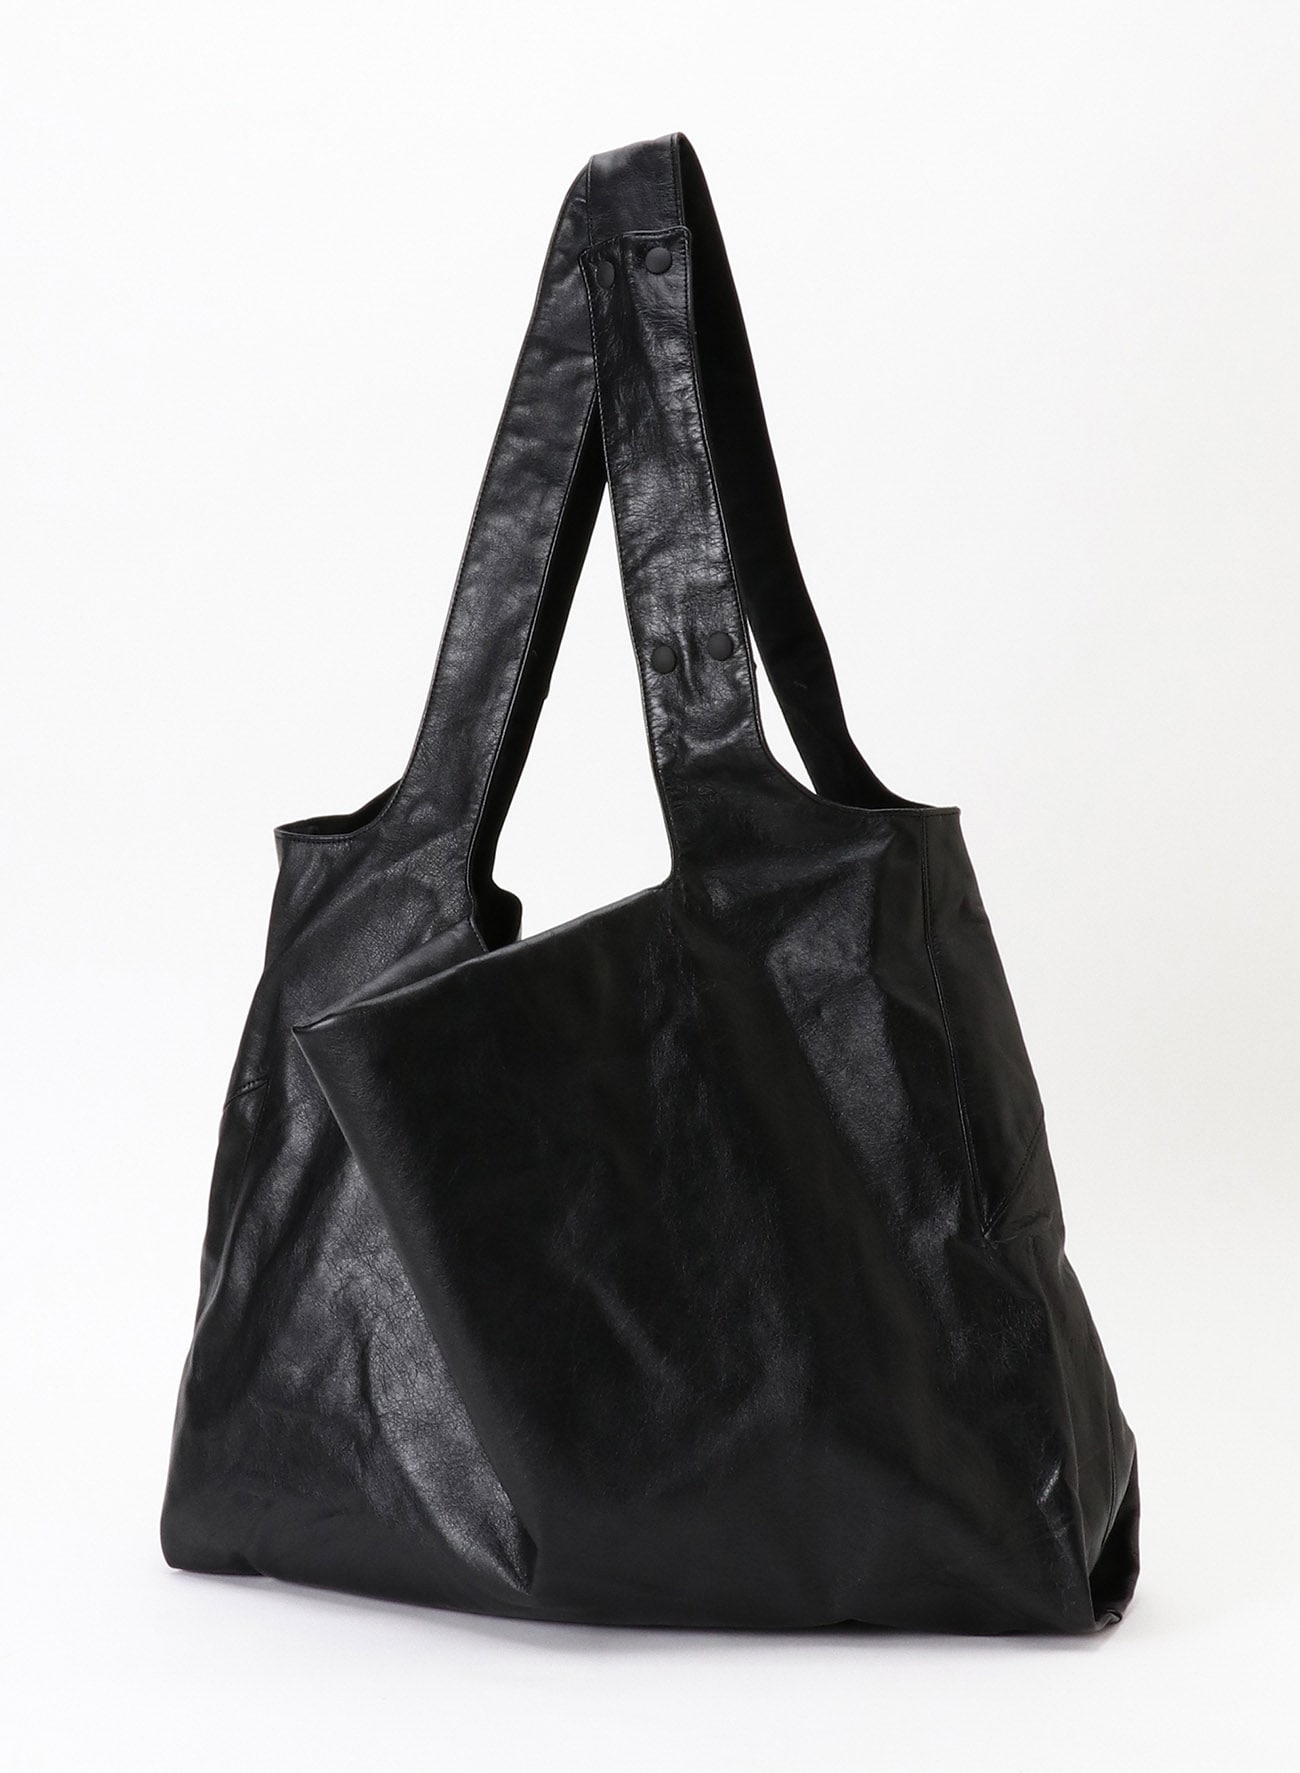 INFINITE(Leather)(FREE SIZE Black): discord Yohji Yamamoto｜THE